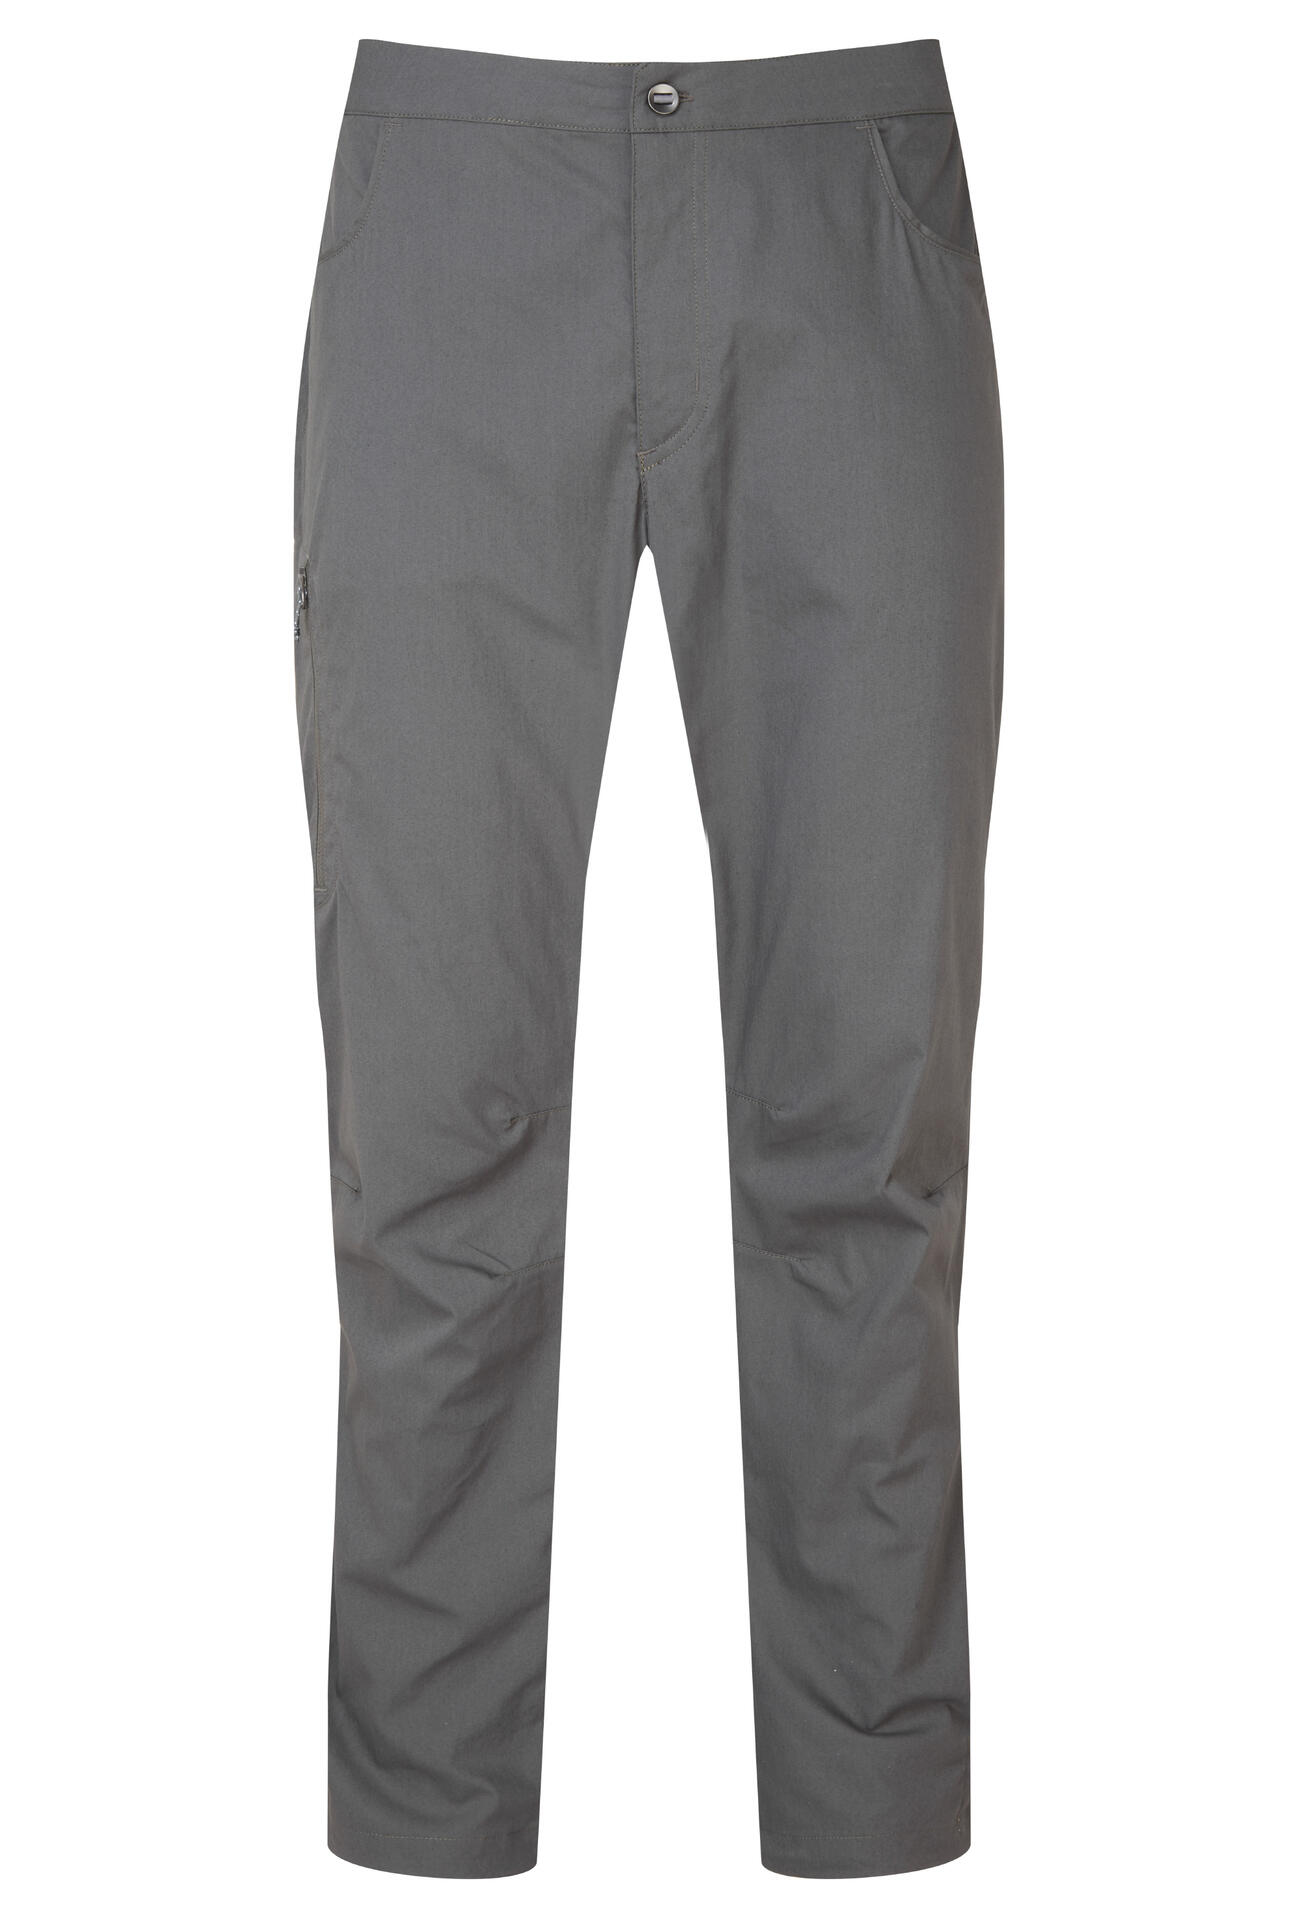 Mountain Equipment Anvil Pant Men'S - zkrácené nohavice Barva: Shadow Grey, Velikost: M